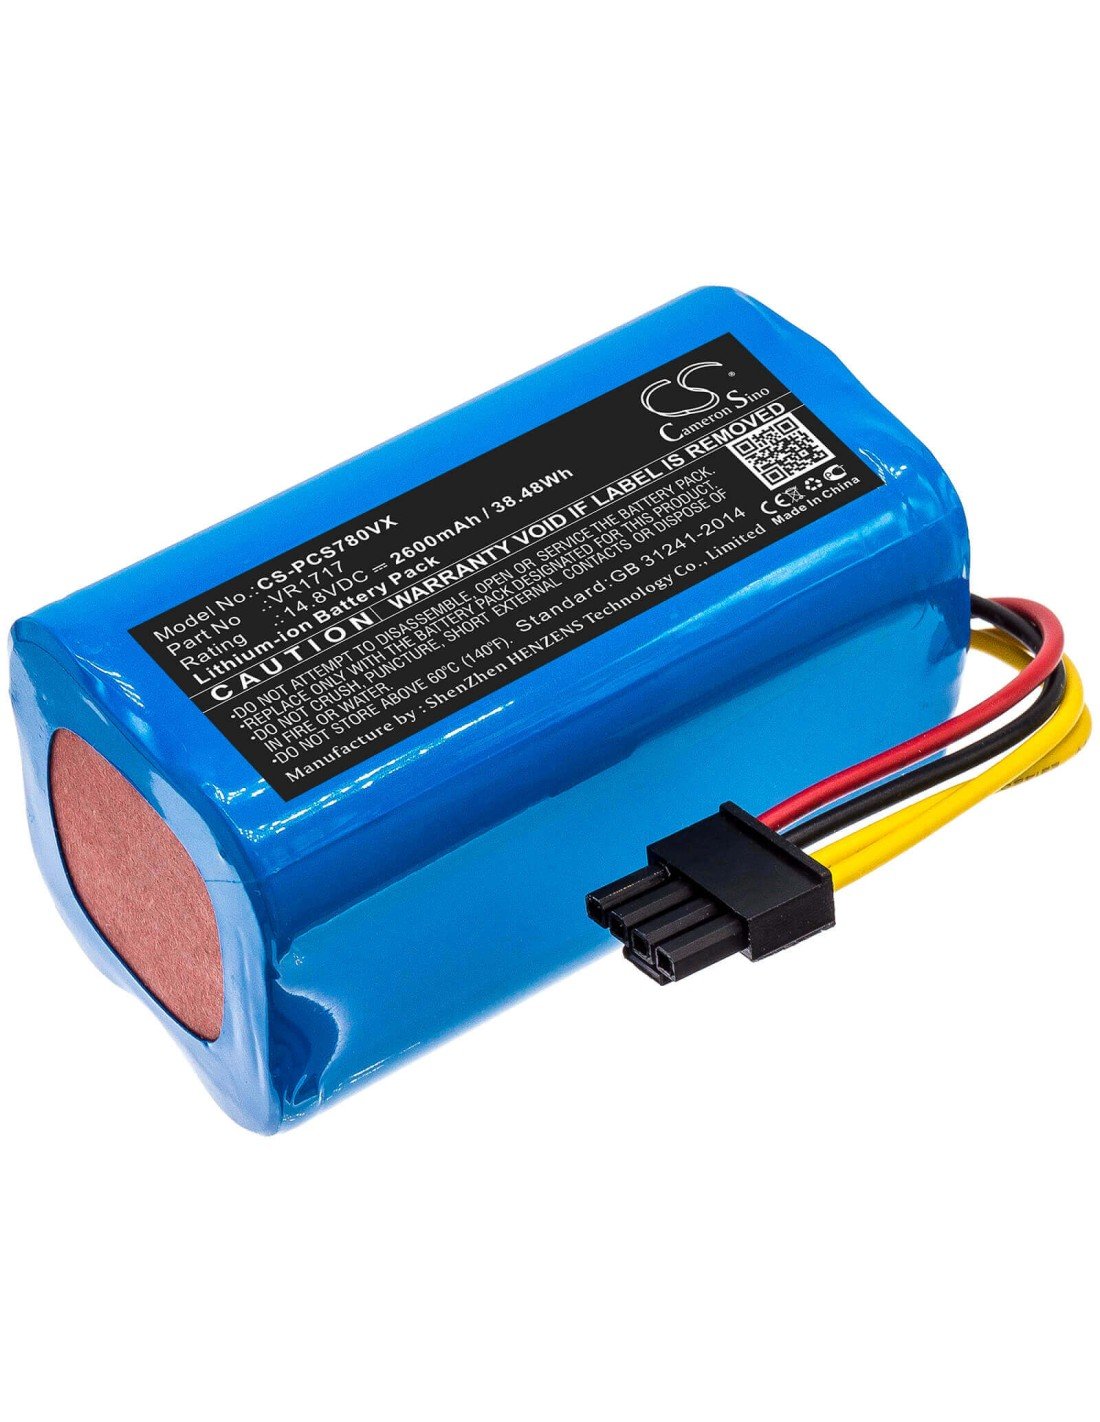 Battery for Proscenic, Cocoa Smart 780t, Cocoa Smart 790t, Summer P1s 14.8V, 2600mAh - 38.48Wh